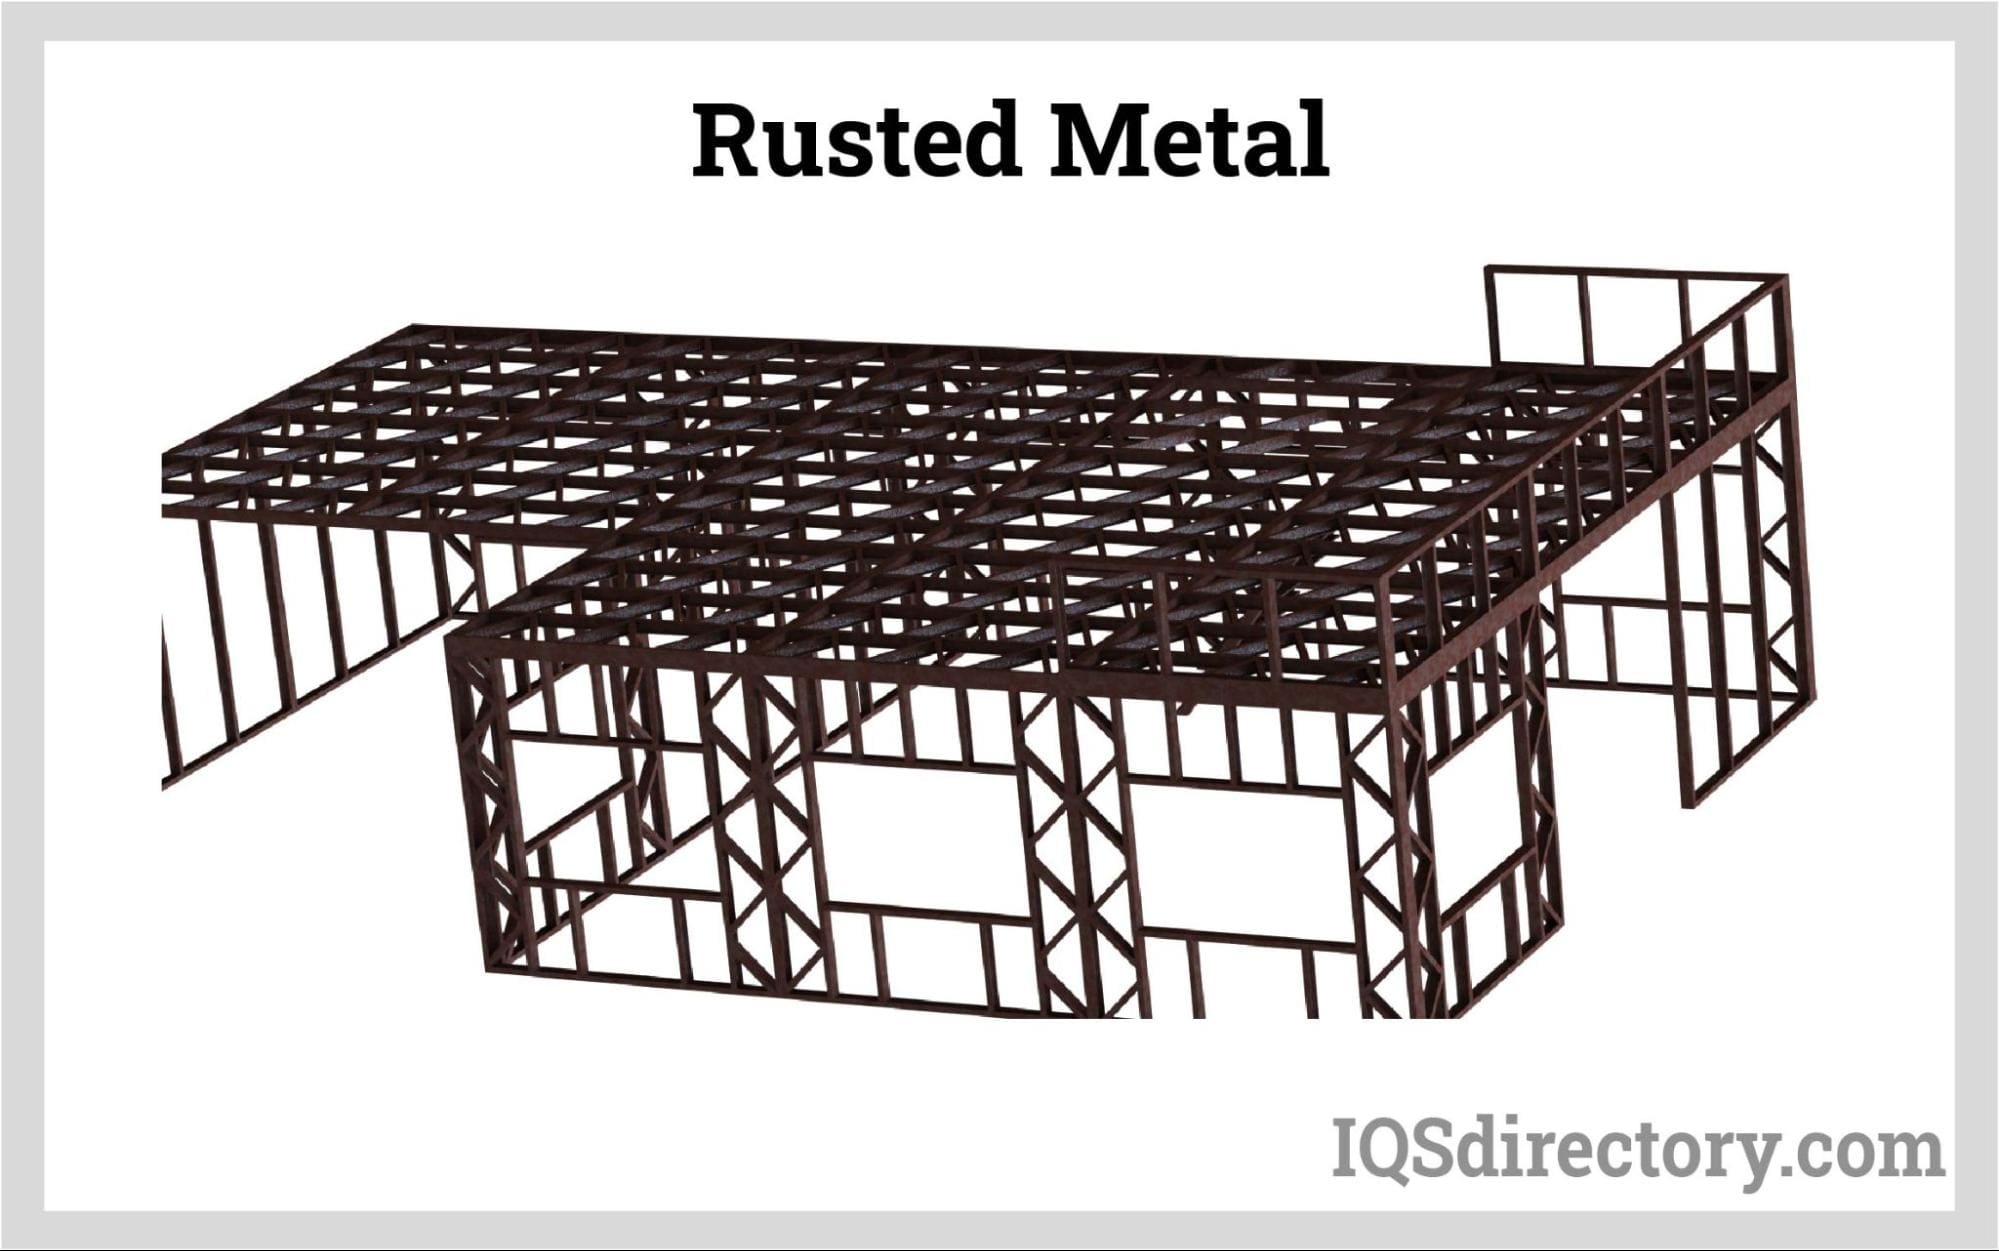 Rusted Metal